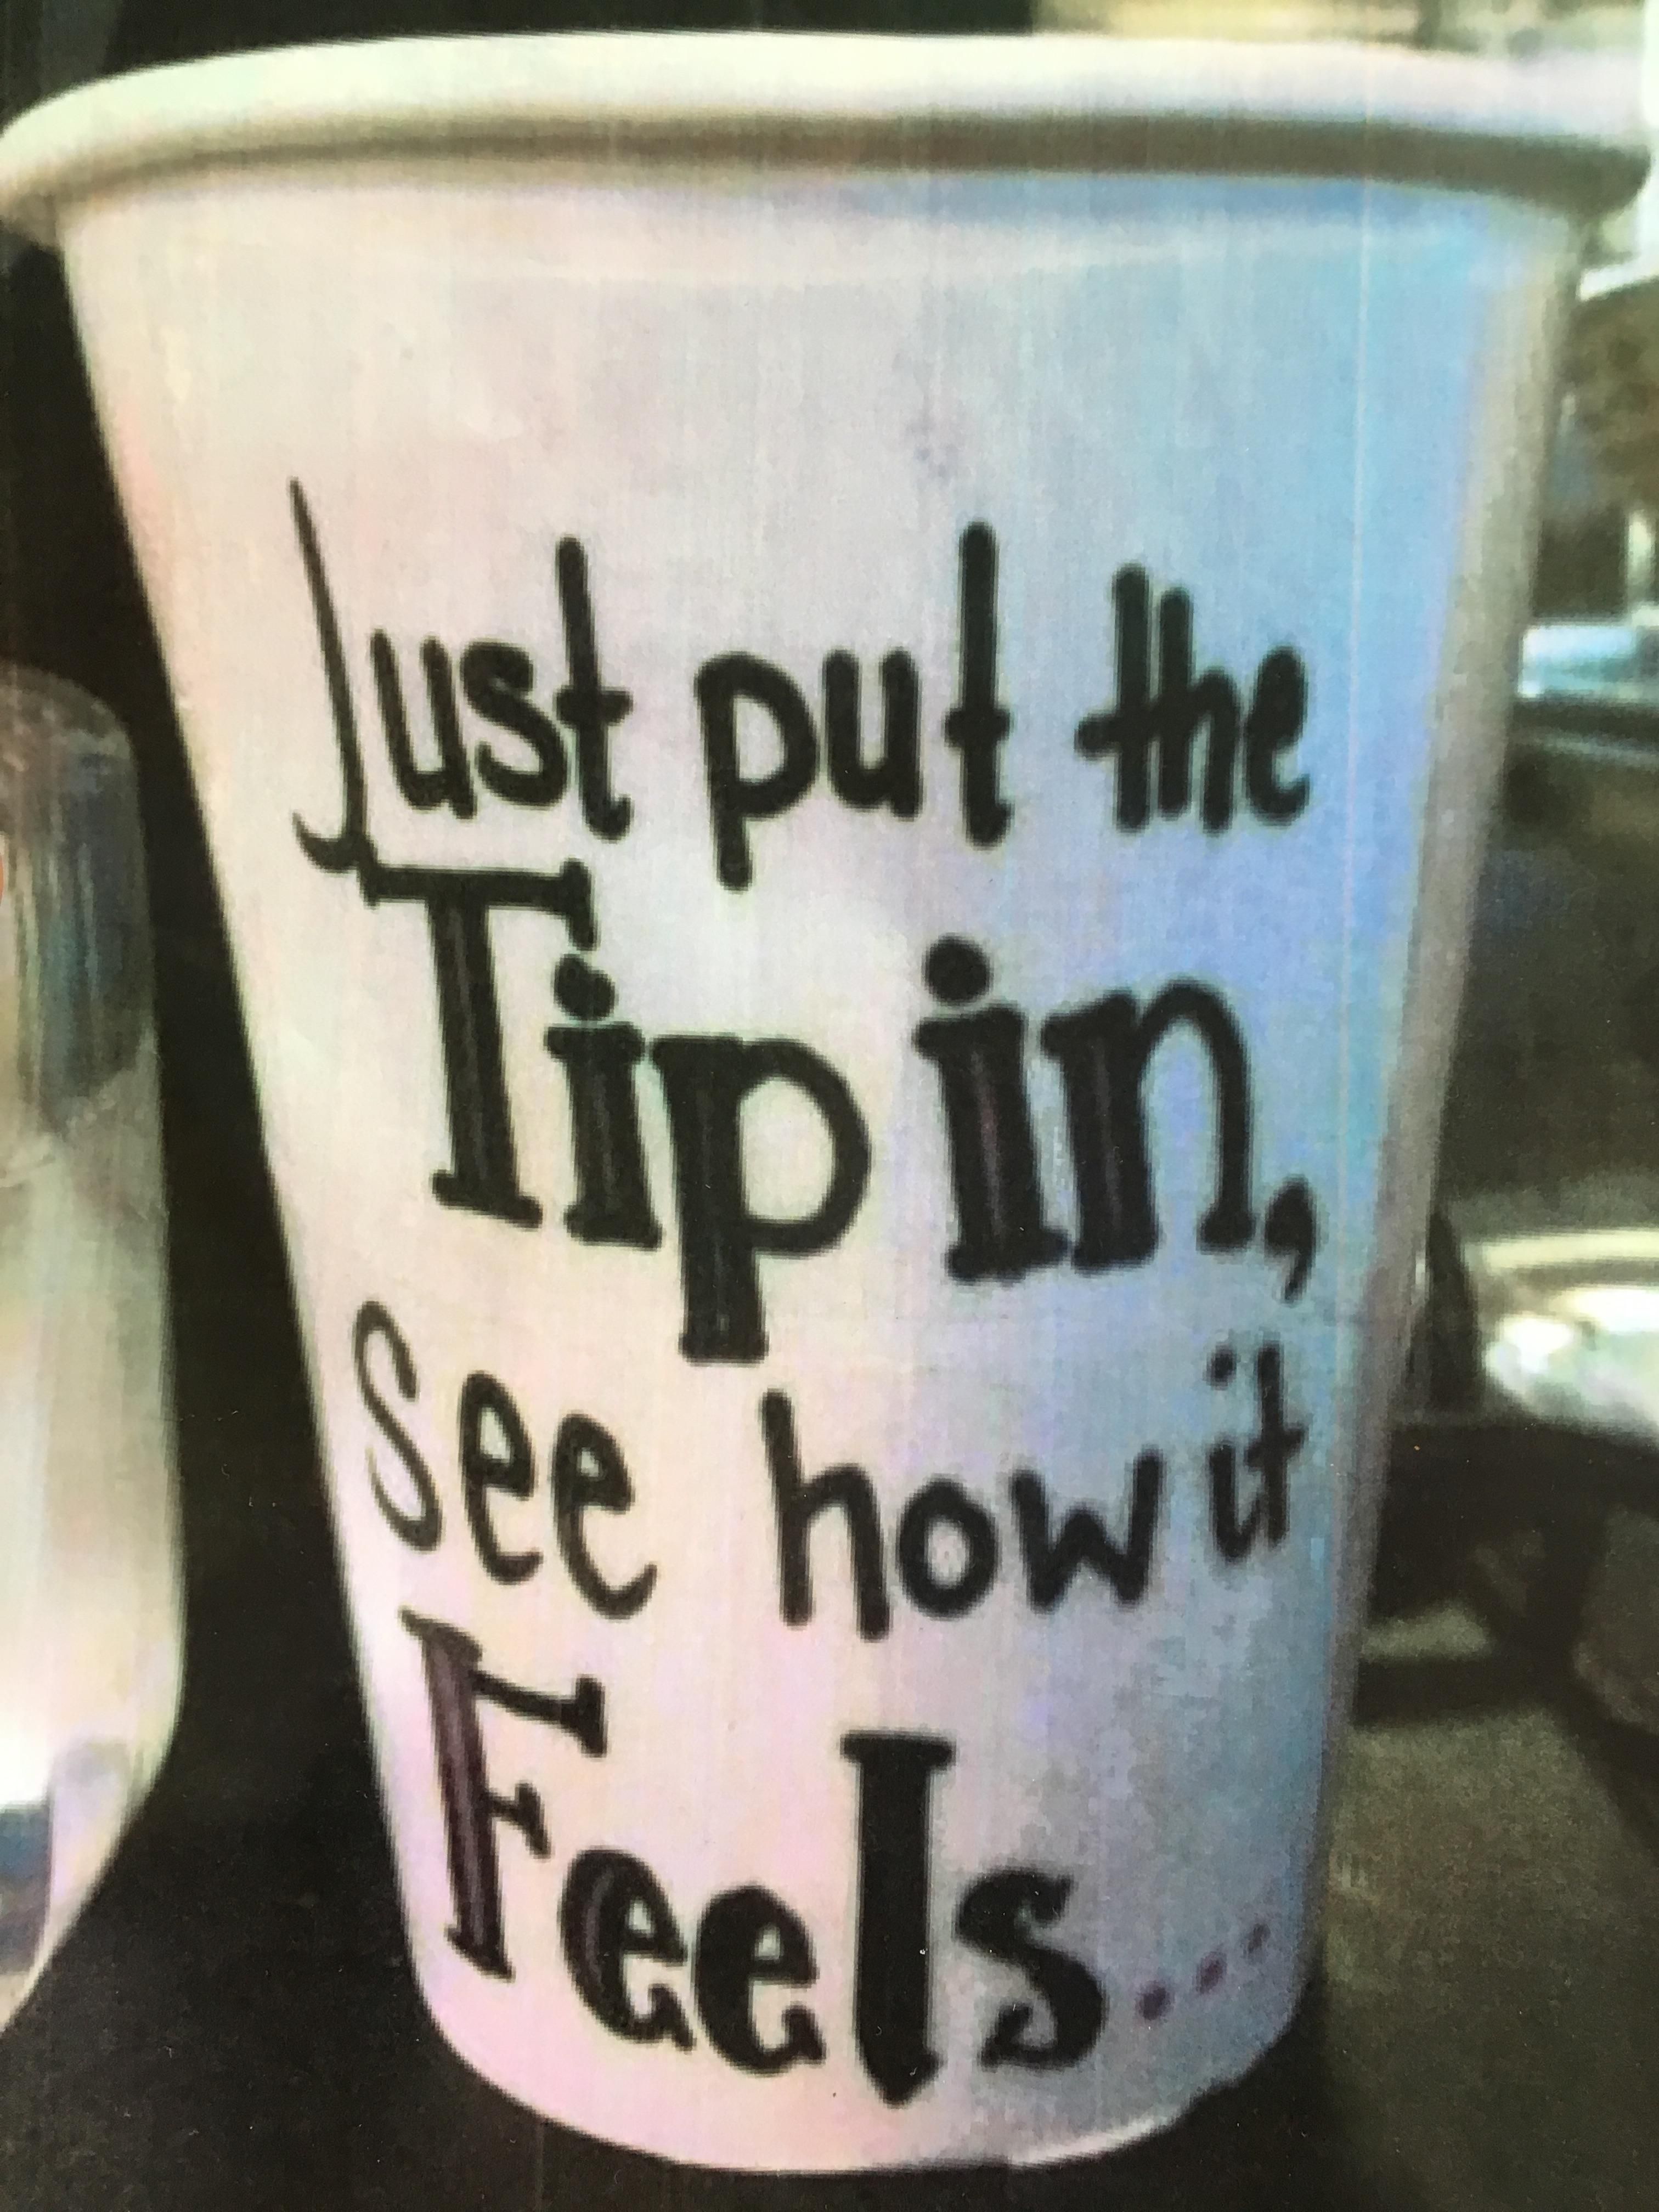 Tip cup